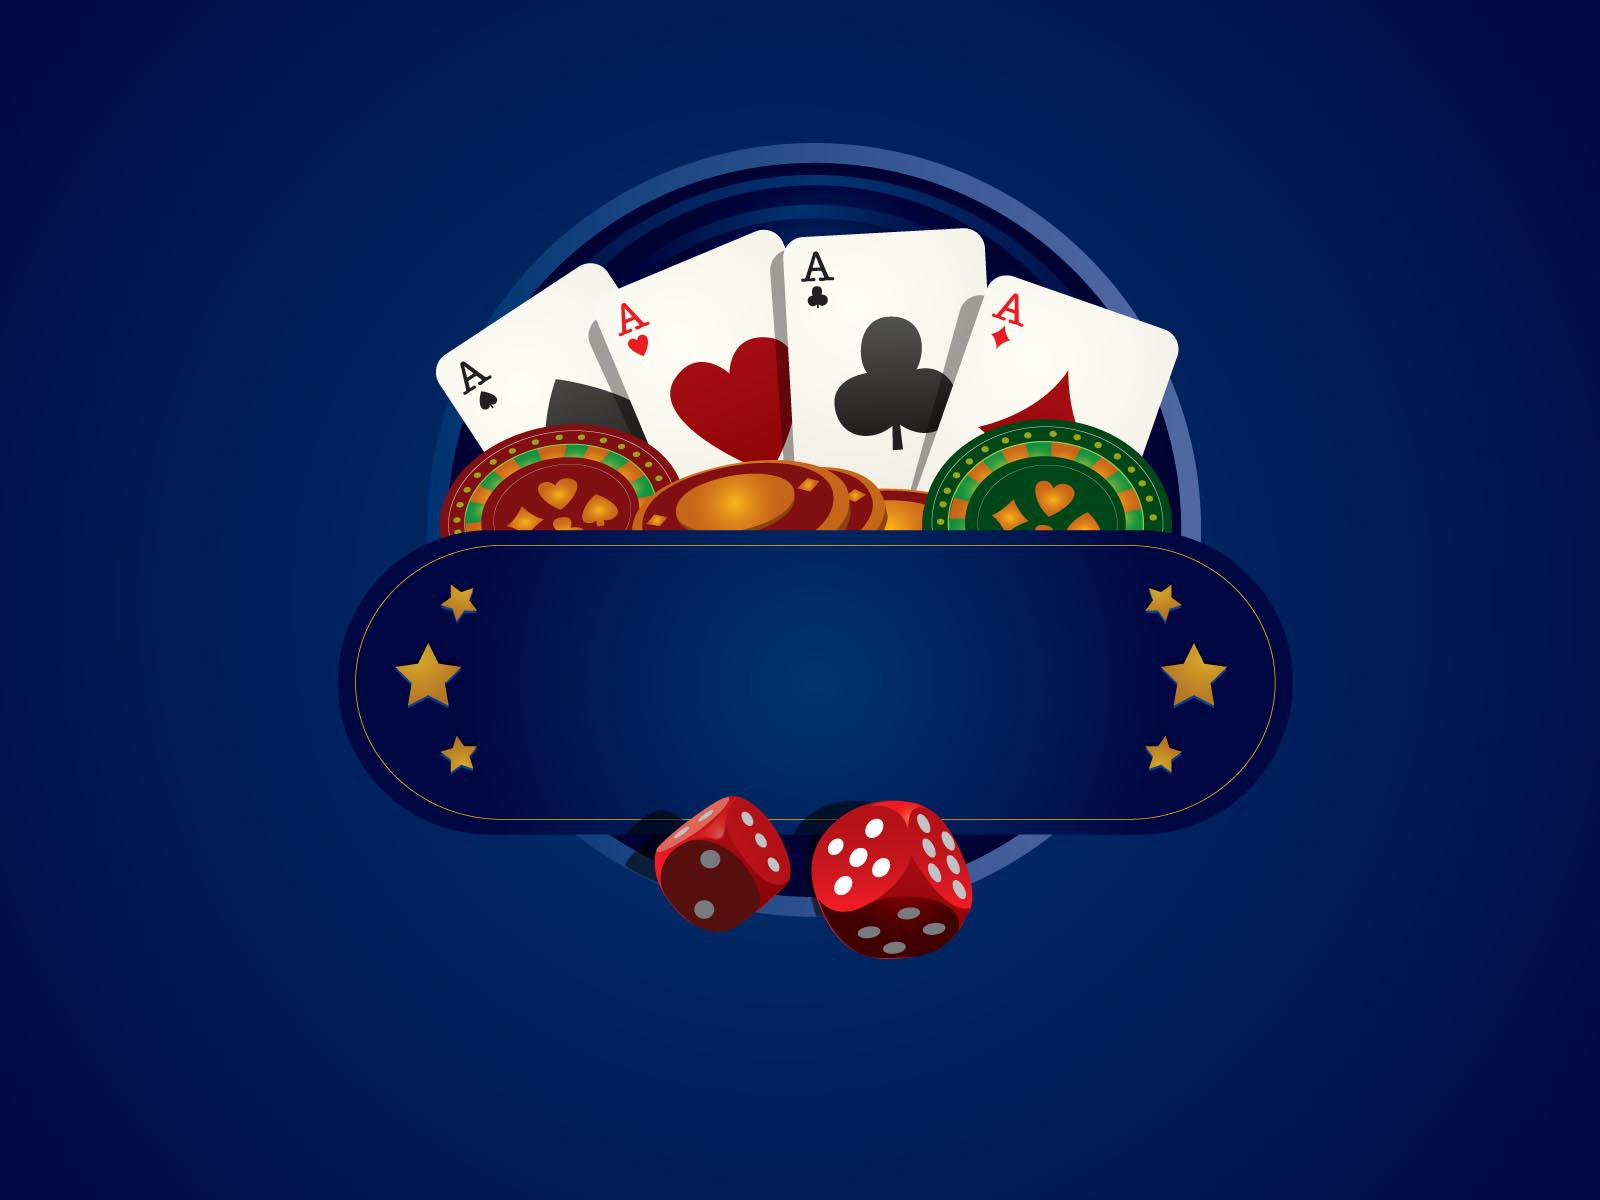 Download Mega888: Your Pocket-Sized Casino Companion